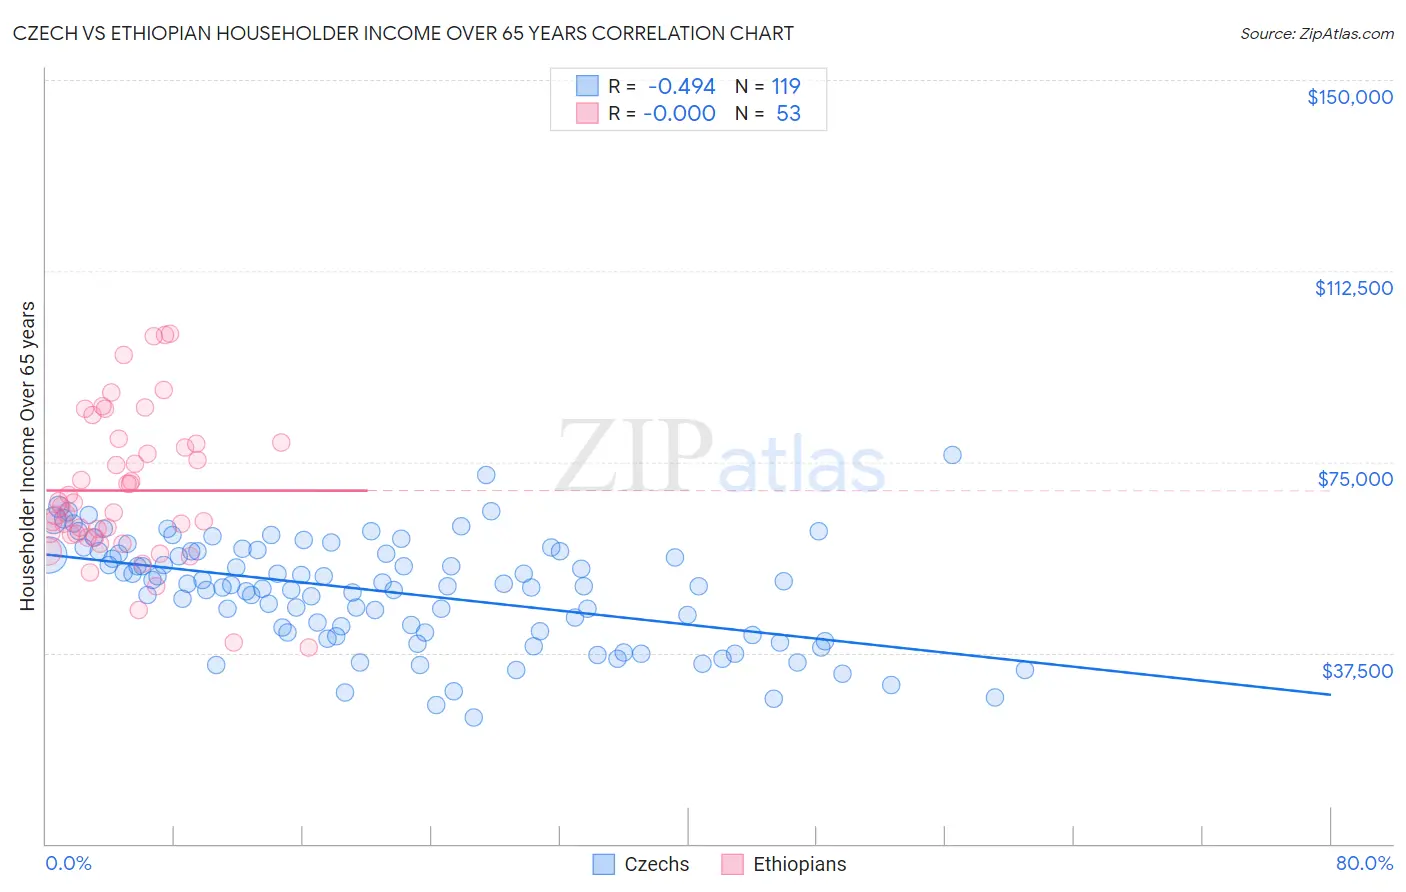 Czech vs Ethiopian Householder Income Over 65 years